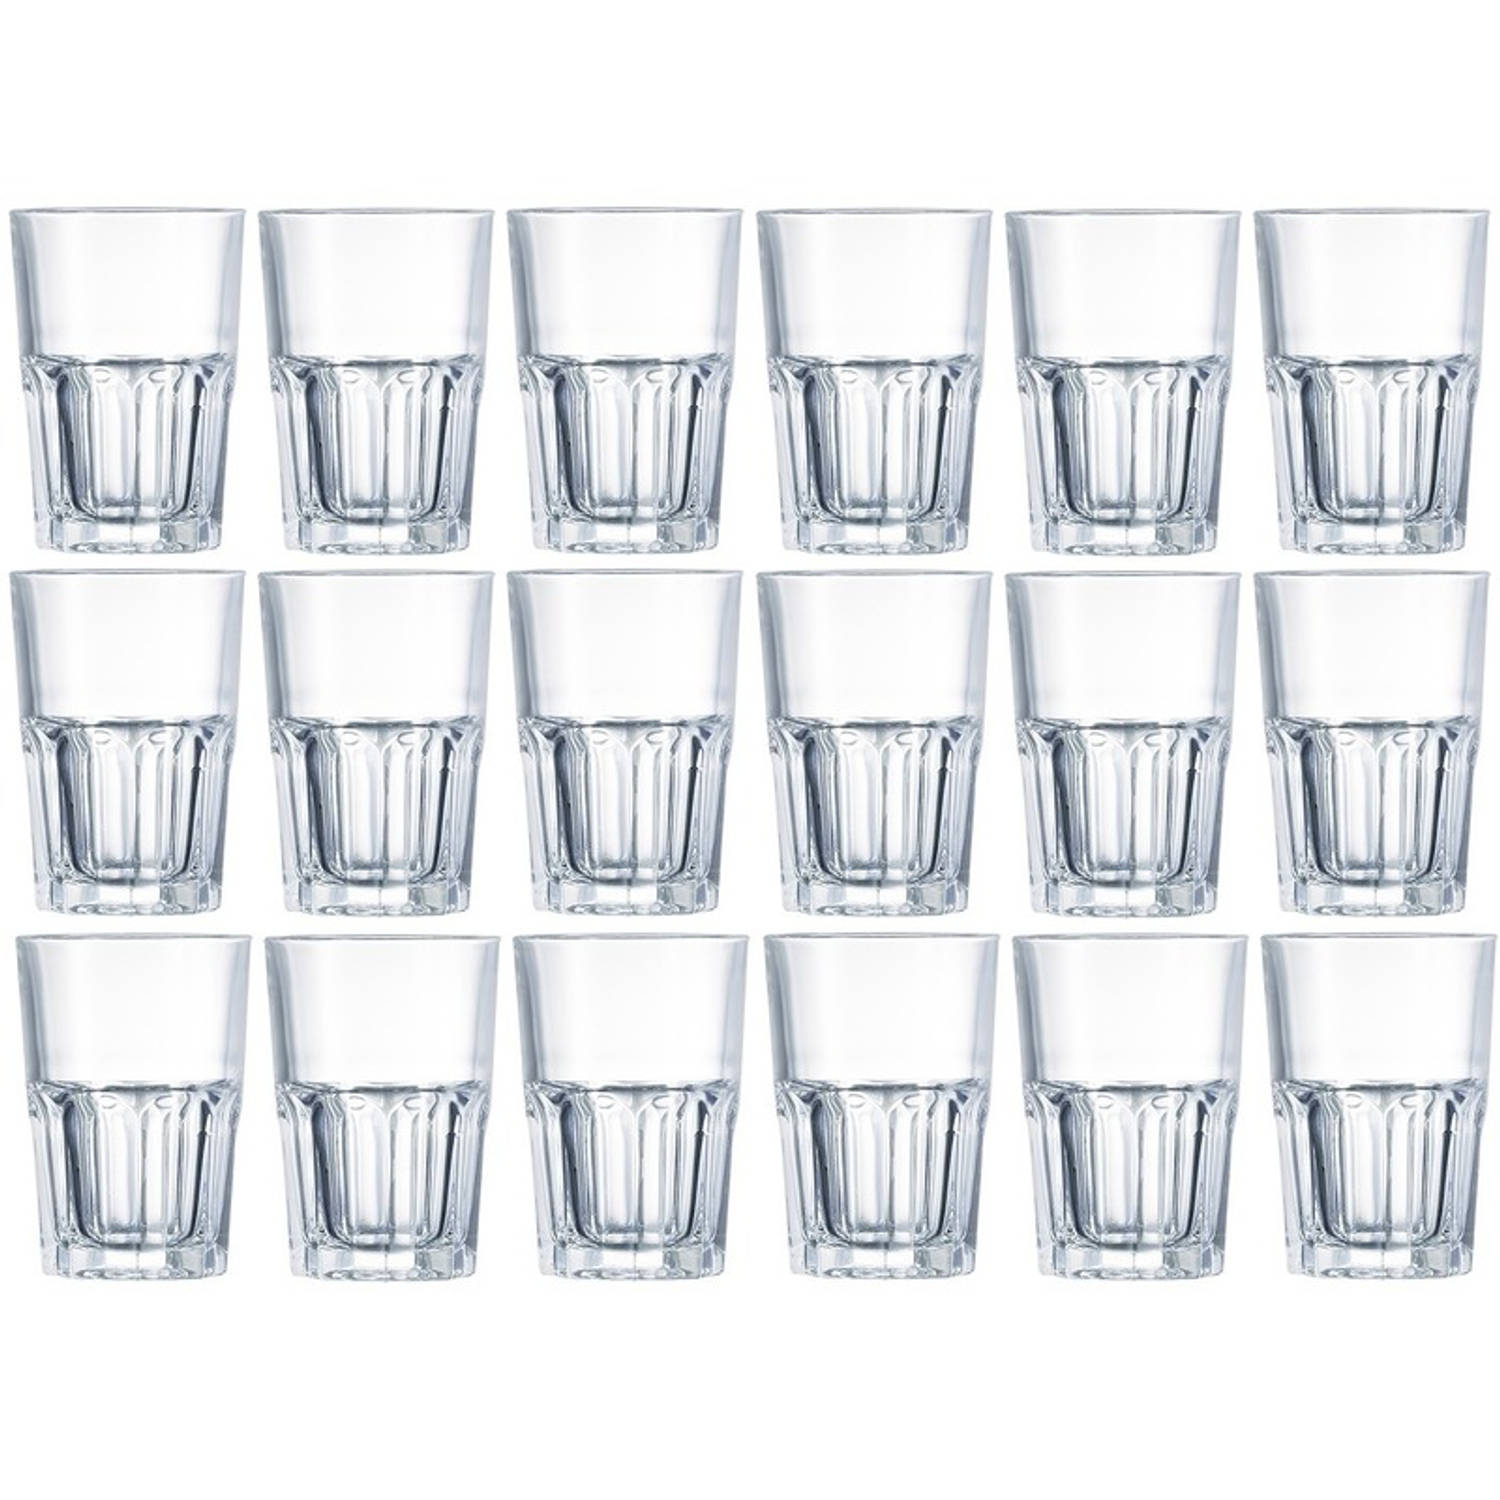 18x Sap glazen transparant 400 ml - Drinkglazen